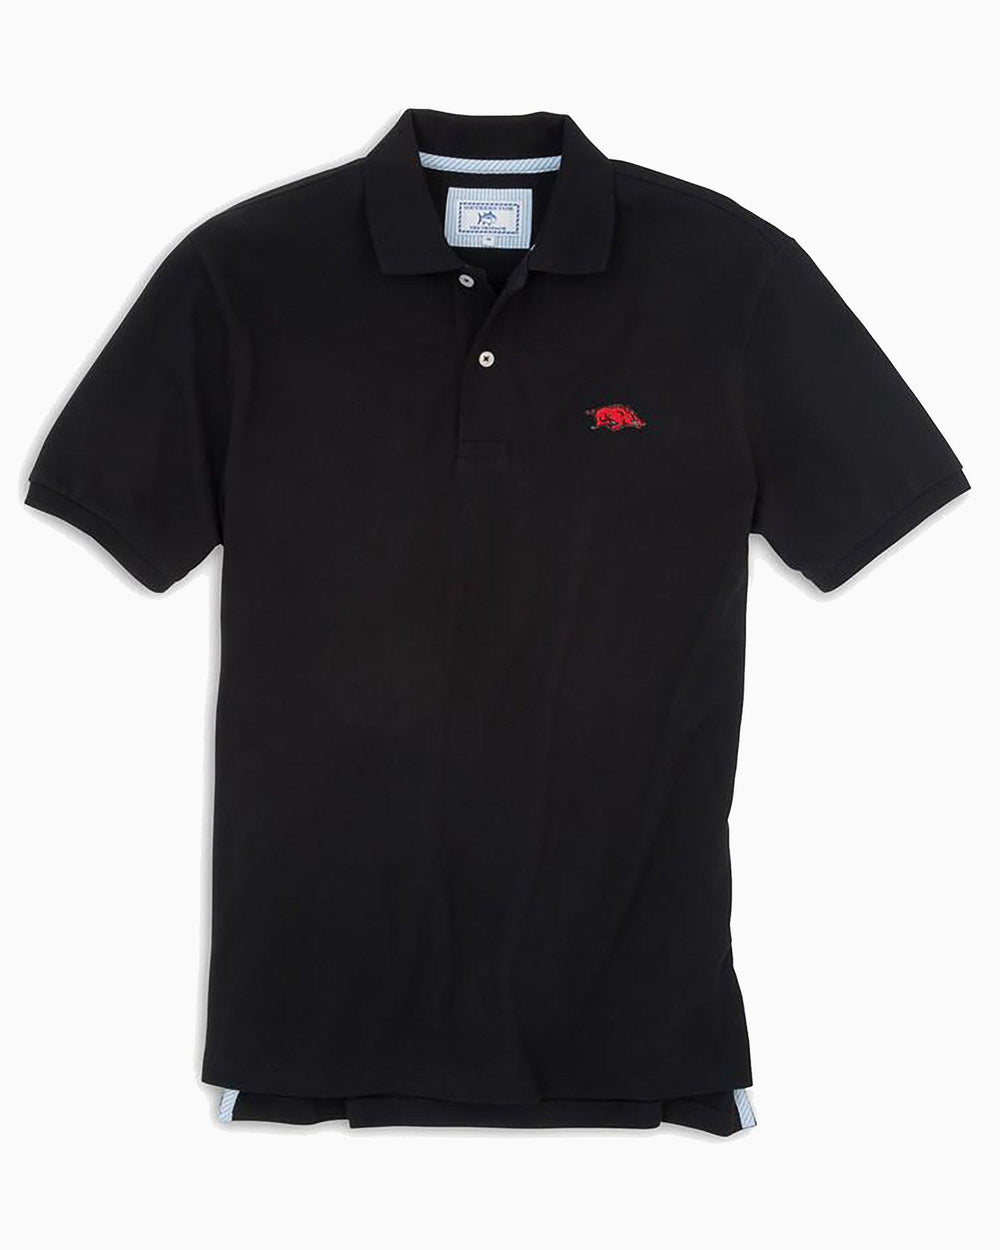 The front view of the Men's Black Arkansas Razorbacks Pique Polo Shirt by Southern Tide - Black